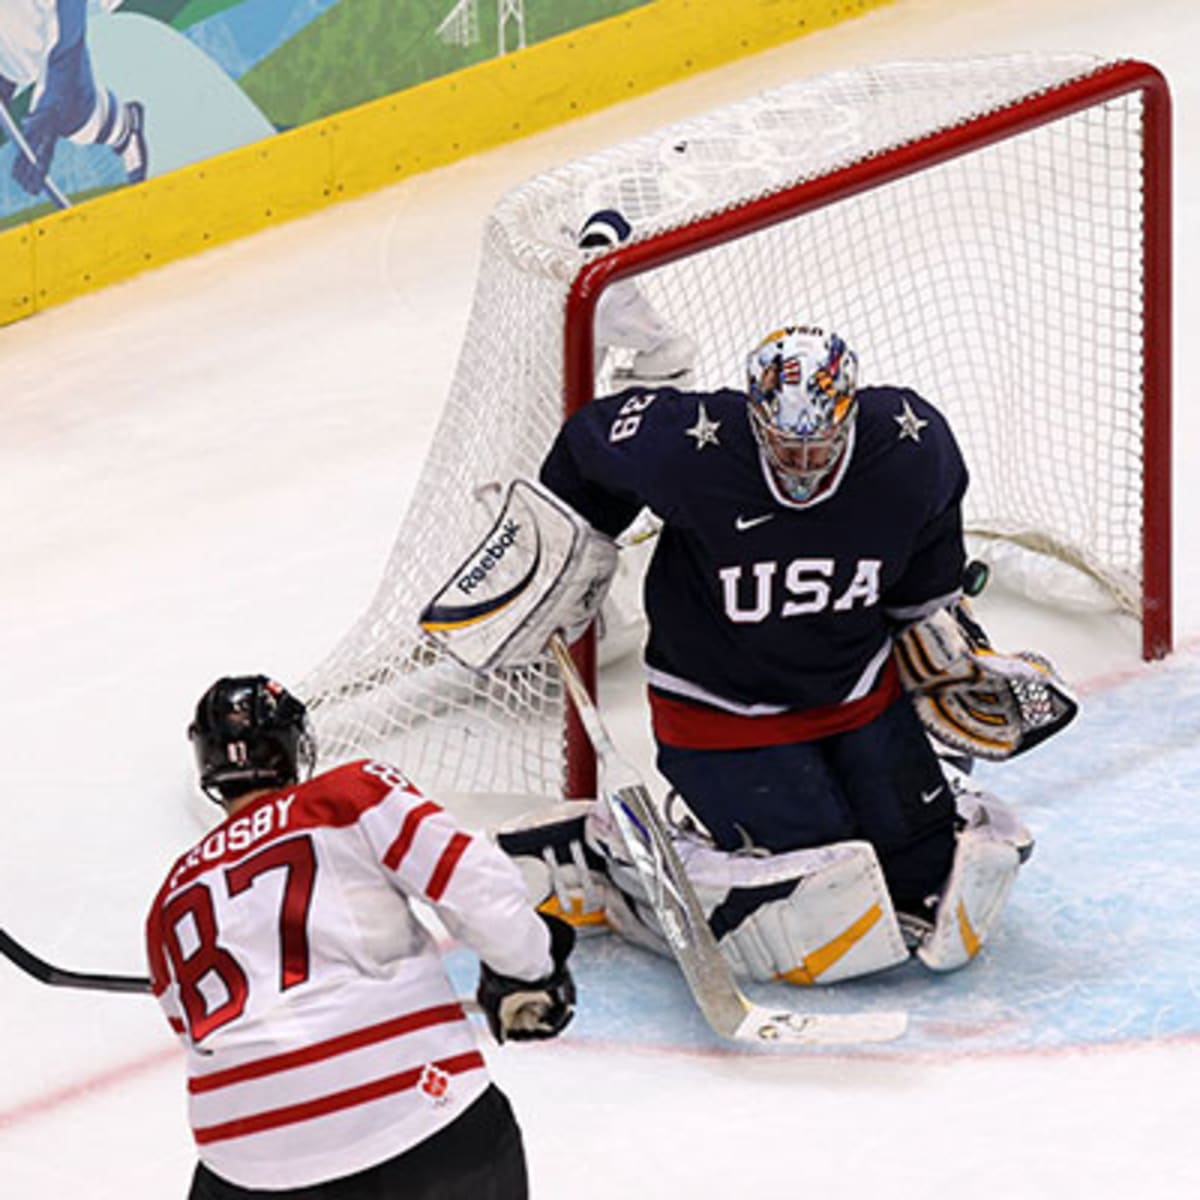 Zach Parise GAME TYING Goal - Canada vs. USA, 2010 Olympics Gold